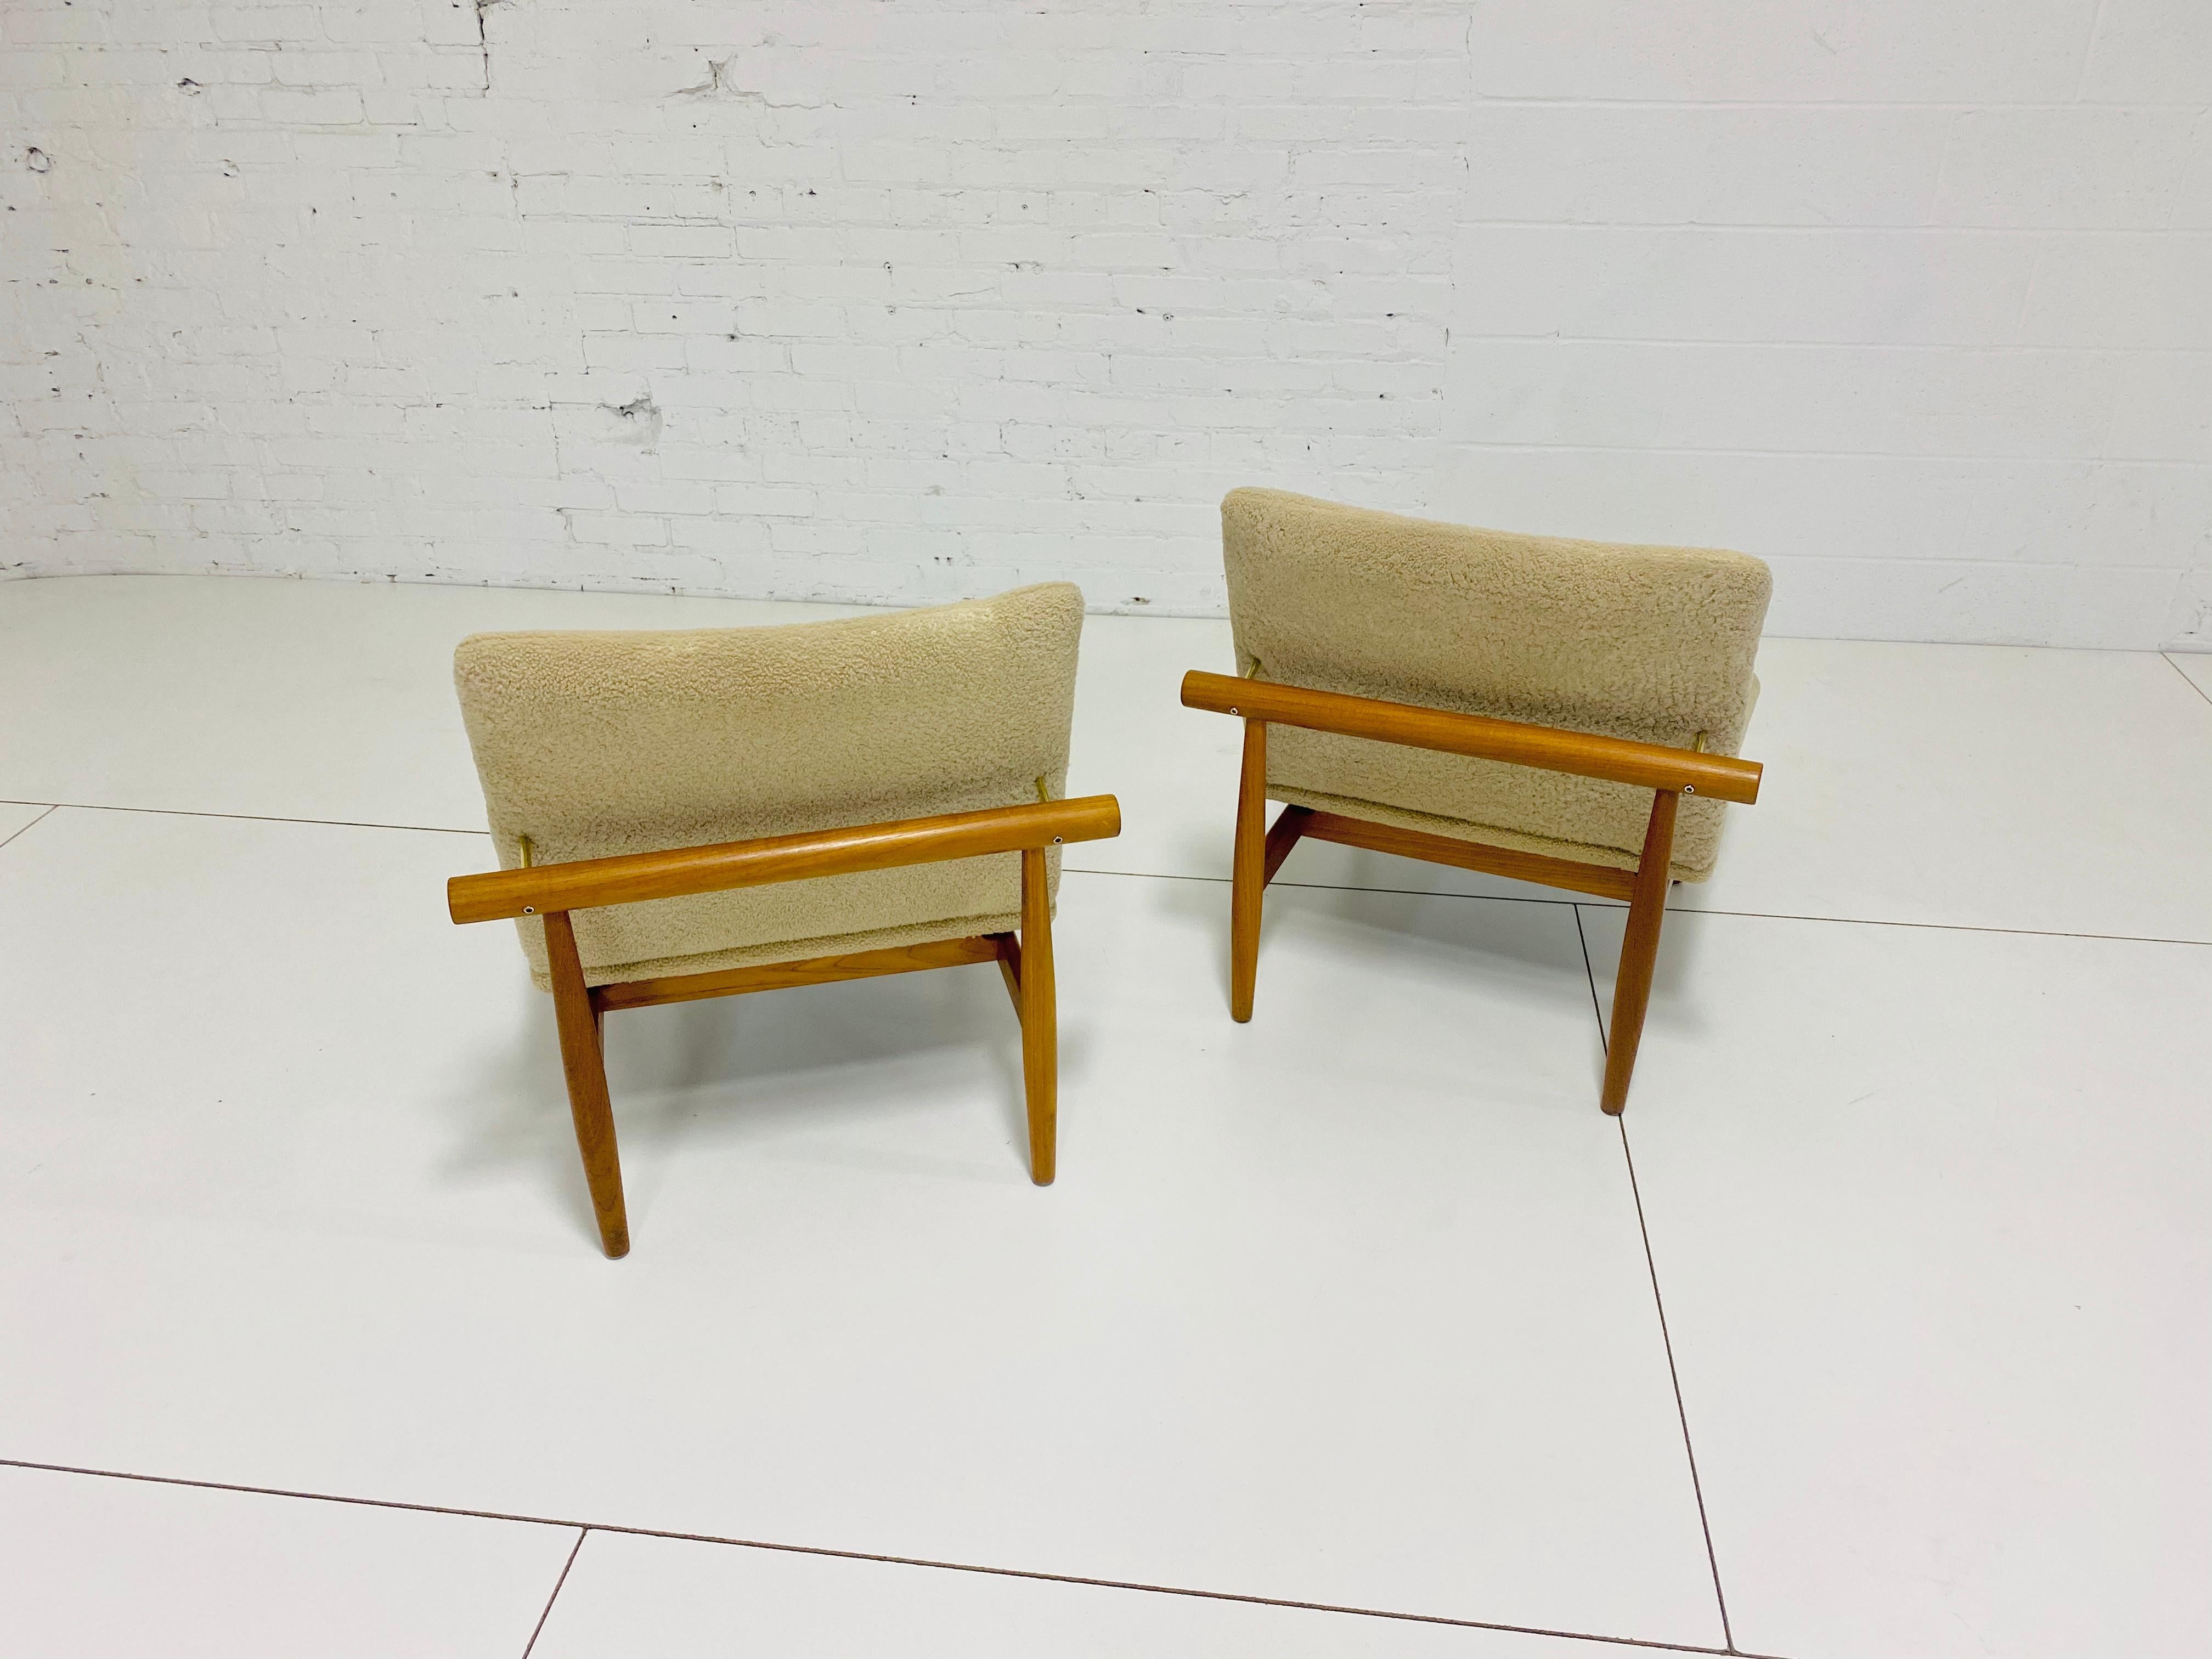 Finn Juhl “Japan Chairs”, Teak and Shearling 2